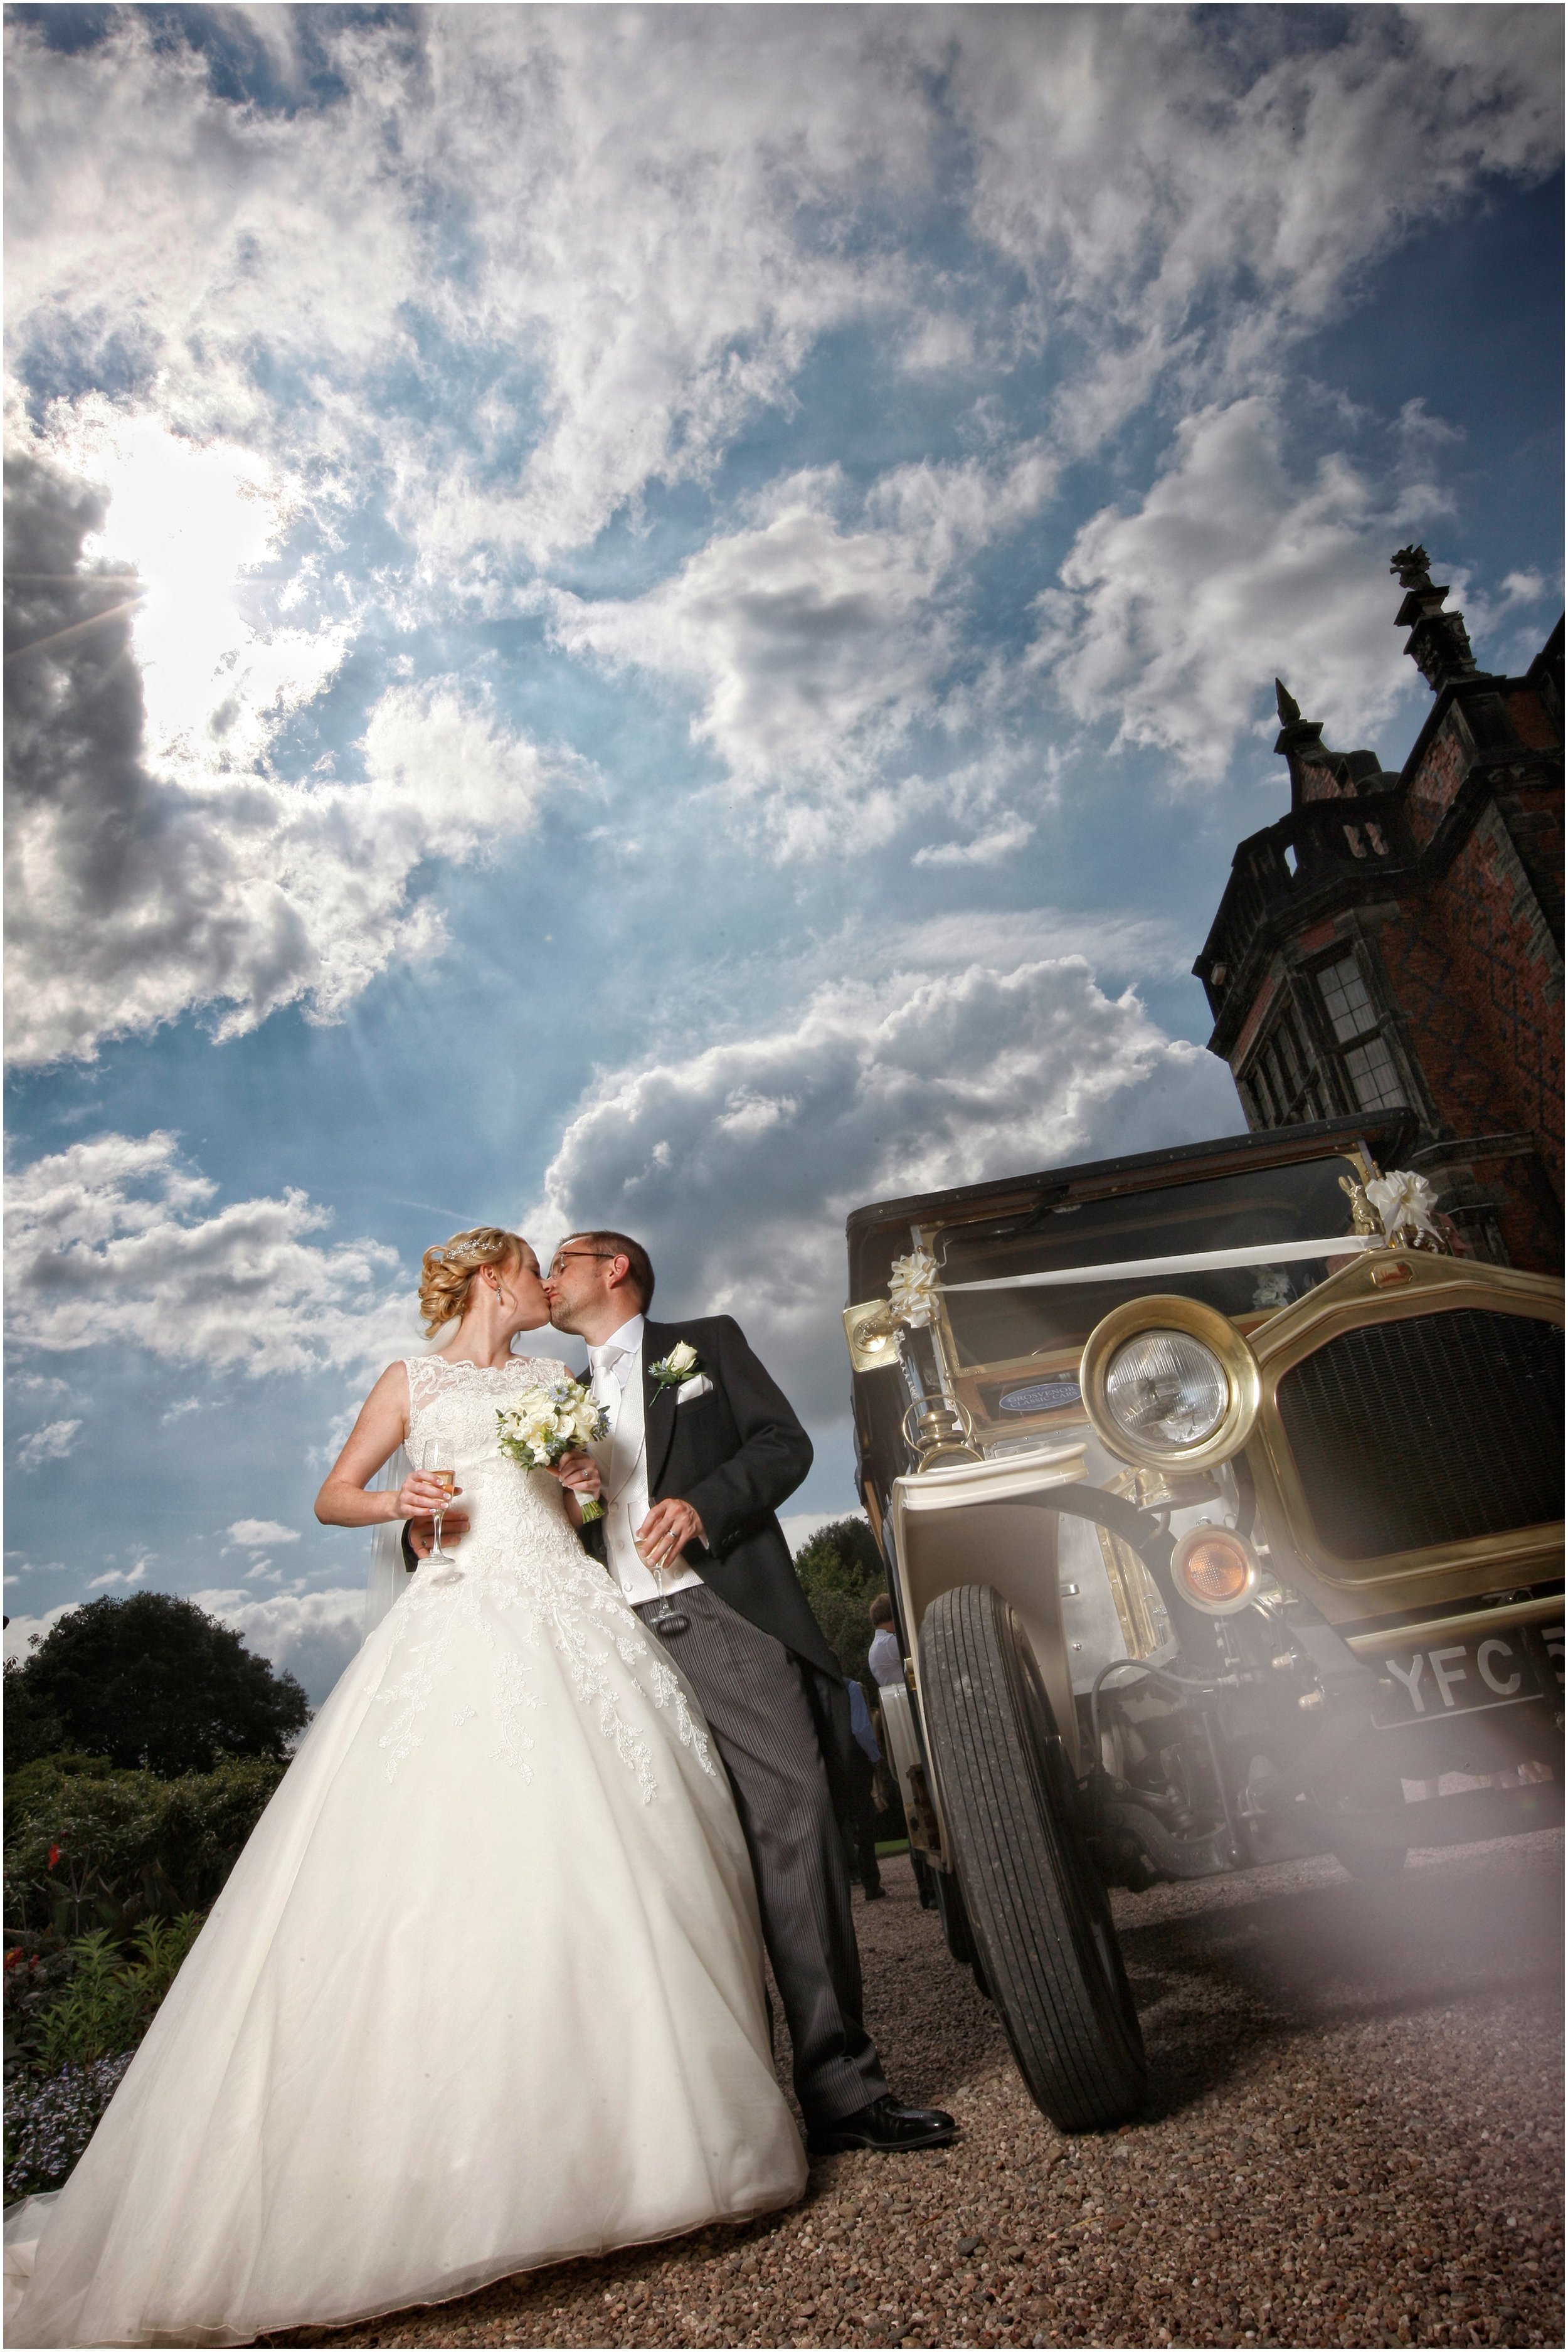 Arley-Hall-weding-photographer-wedding-photography-brett-harkness-cheshire-wedding-photographer012_.jpg